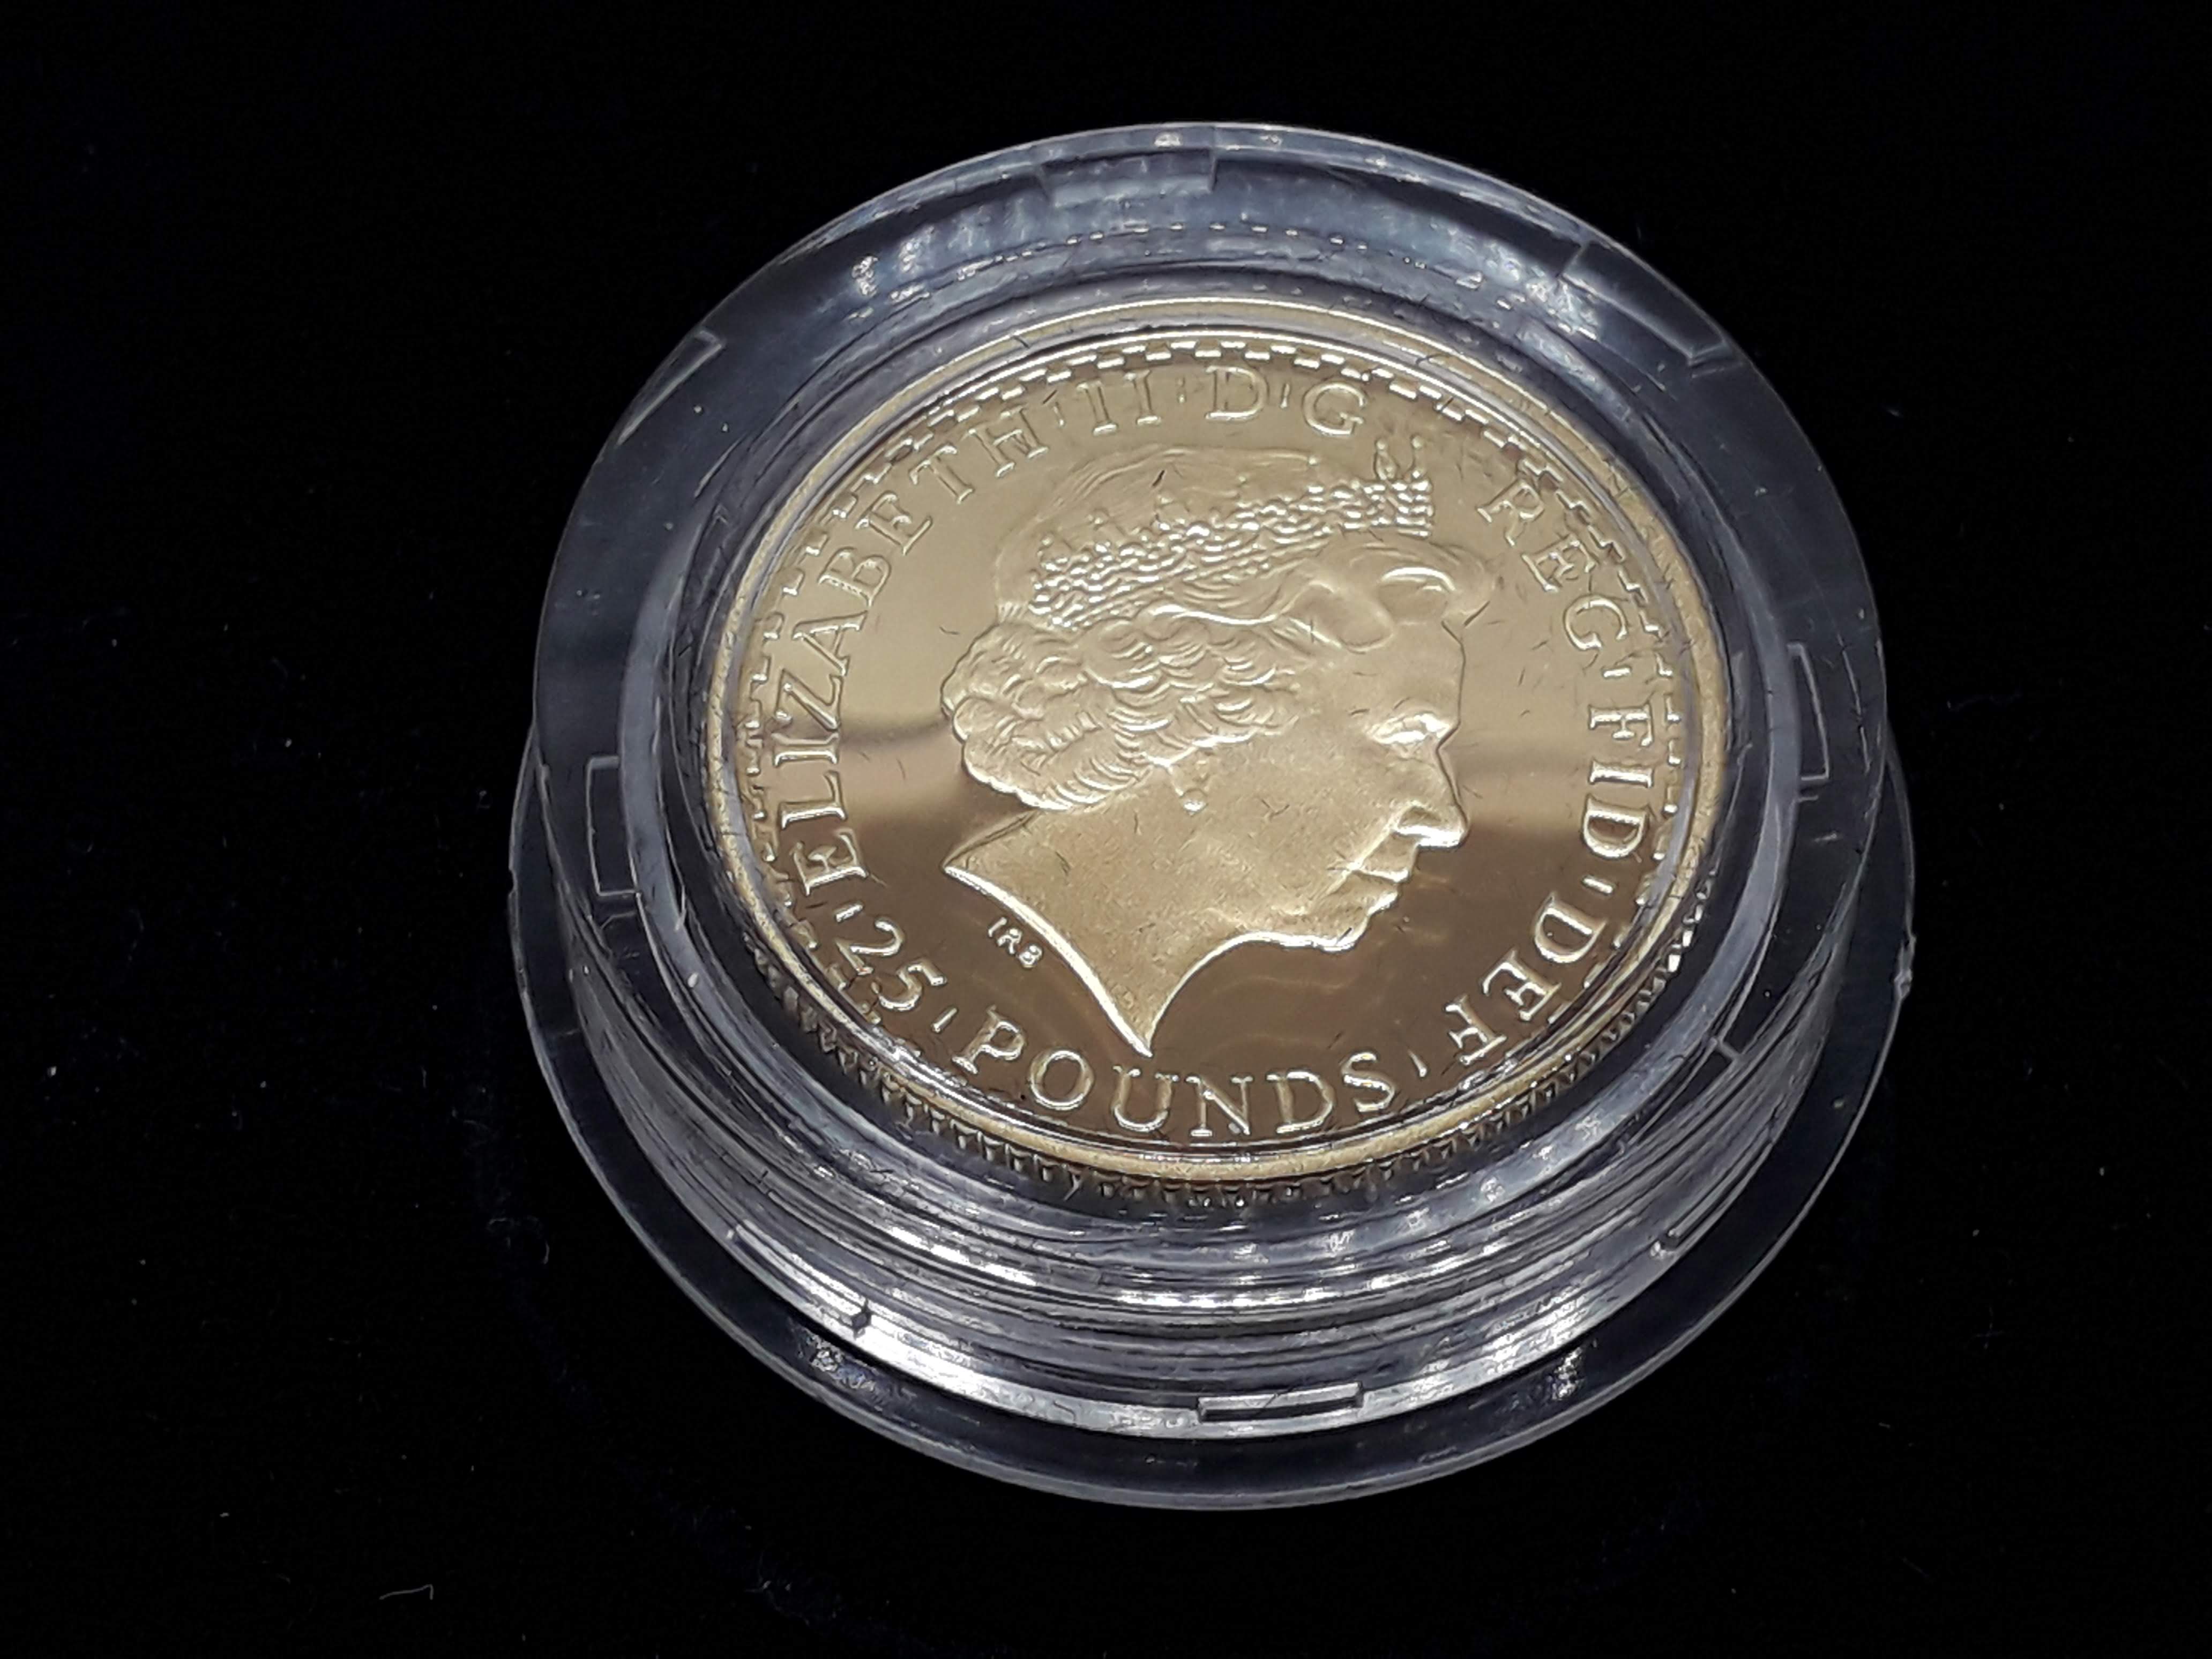 Elizabeth II Royal Mint 2010 Britannia Three Coin Gold Proof Set comprising £10, £25 & £50, 0.9167 - Image 6 of 7